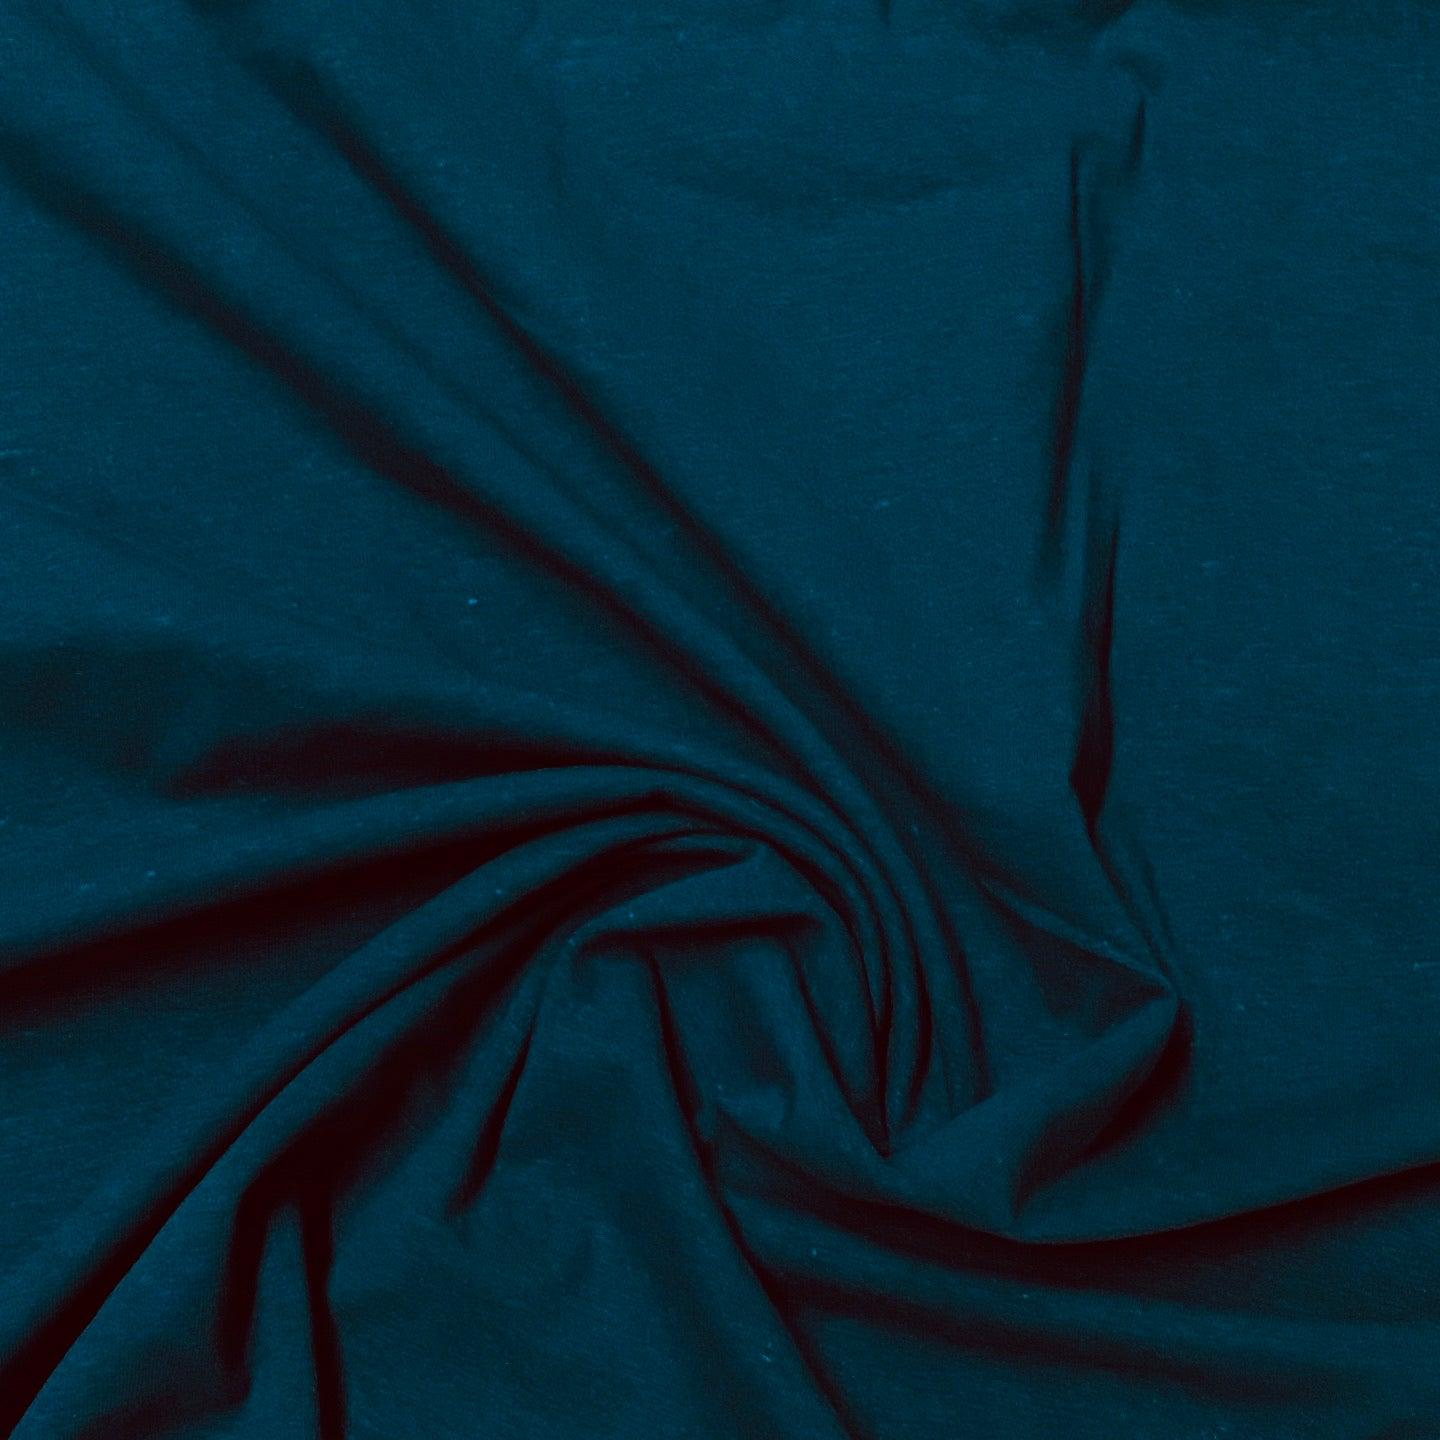 Moroccan Hemp Stretch Jersey Fabric 240 GSM -$11.70/yd - Rolls - Nature's Fabrics